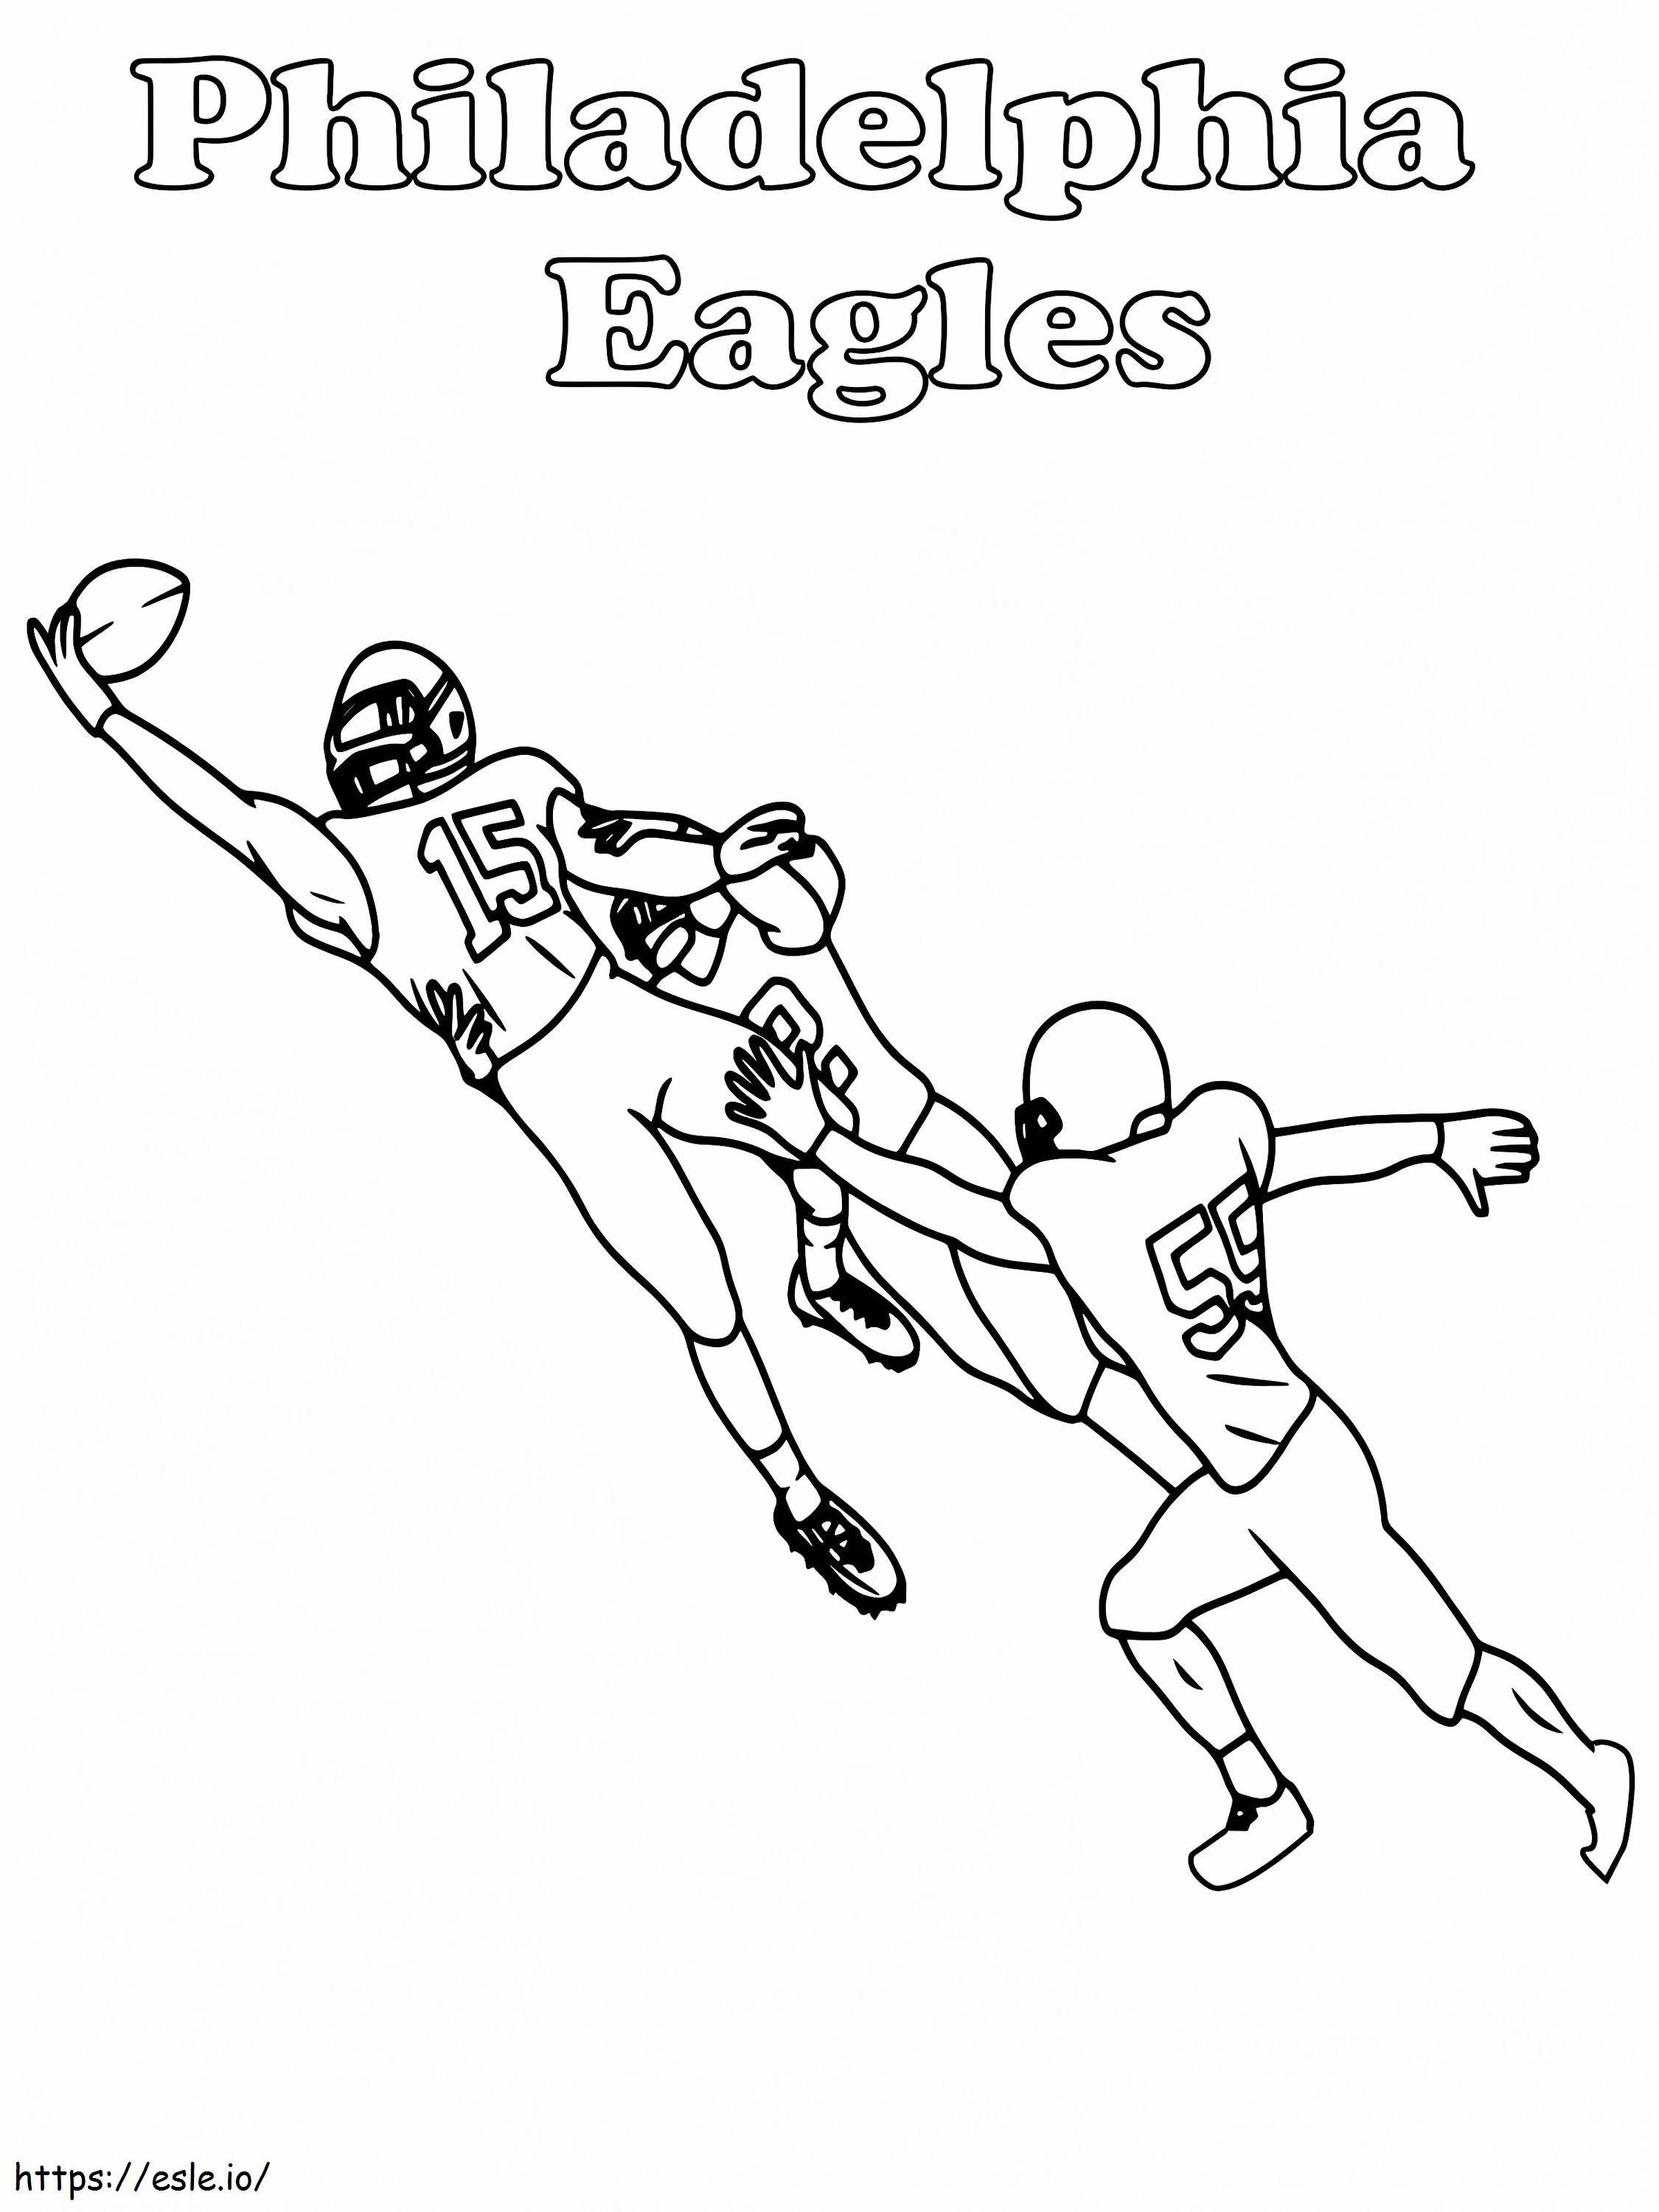 Philadelphia Eagles Oyuncu Yakalama boyama